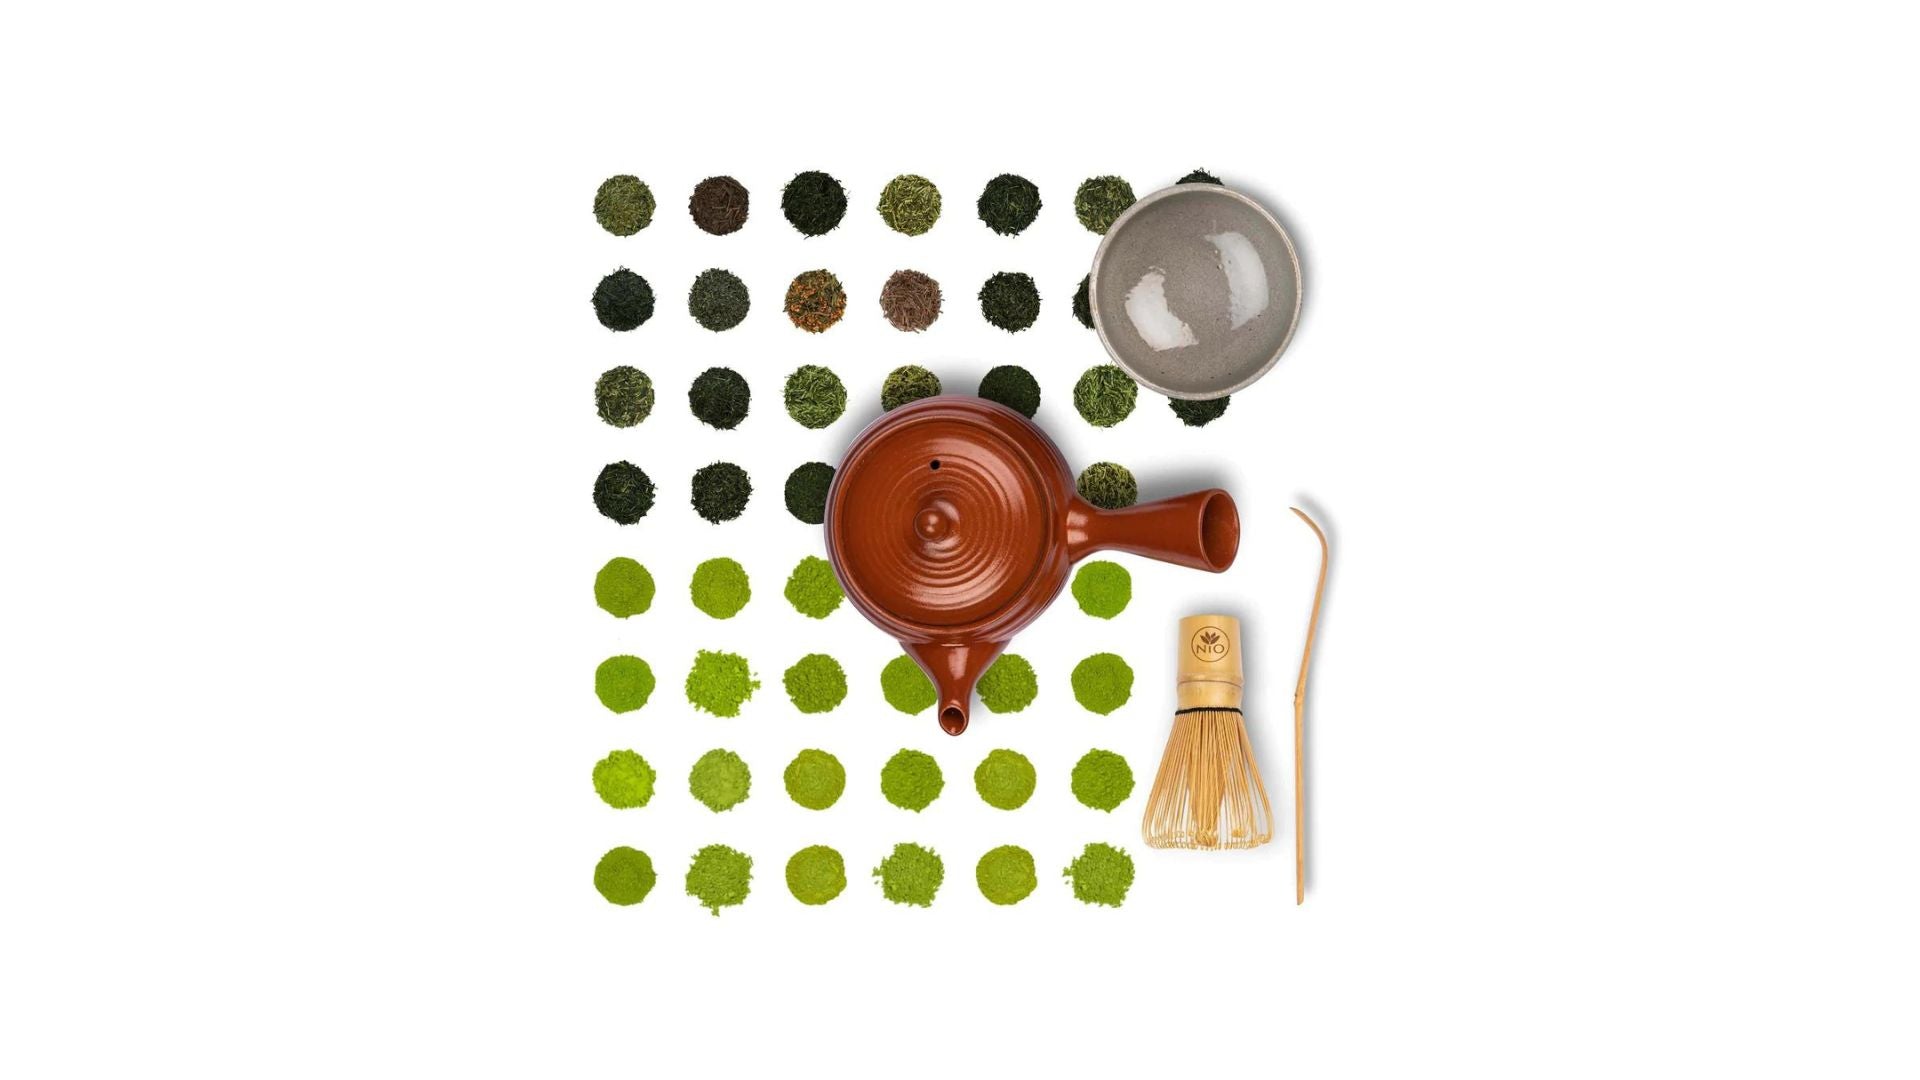 Matcha Tea Sampler 21 Pack with Matcha Whisk – Nio Teas